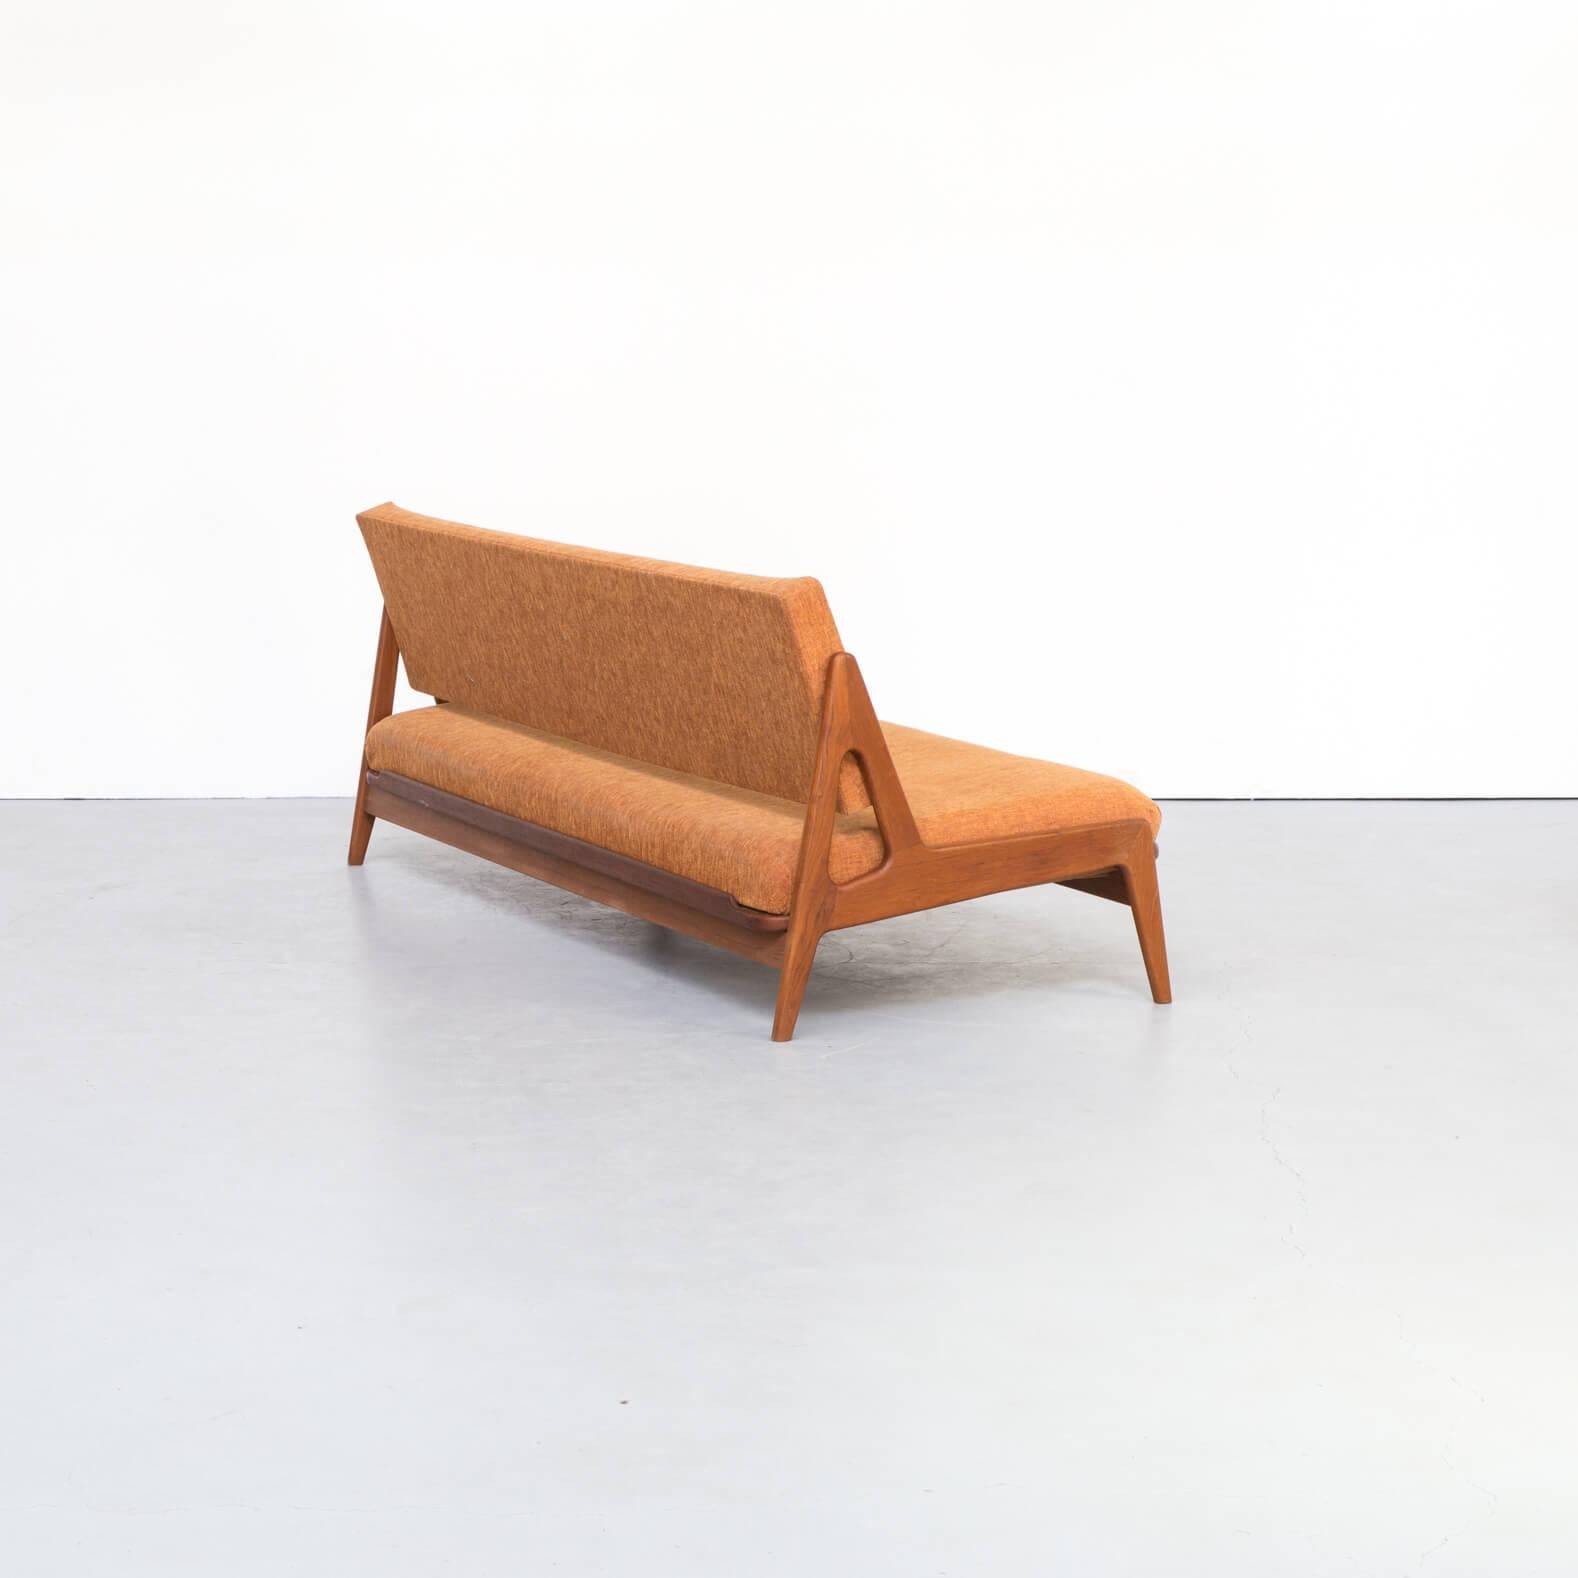 1960s Arne Wahl Iversen Daybed Sofa for Komfort, Denmark In Good Condition For Sale In Amstelveen, Noord